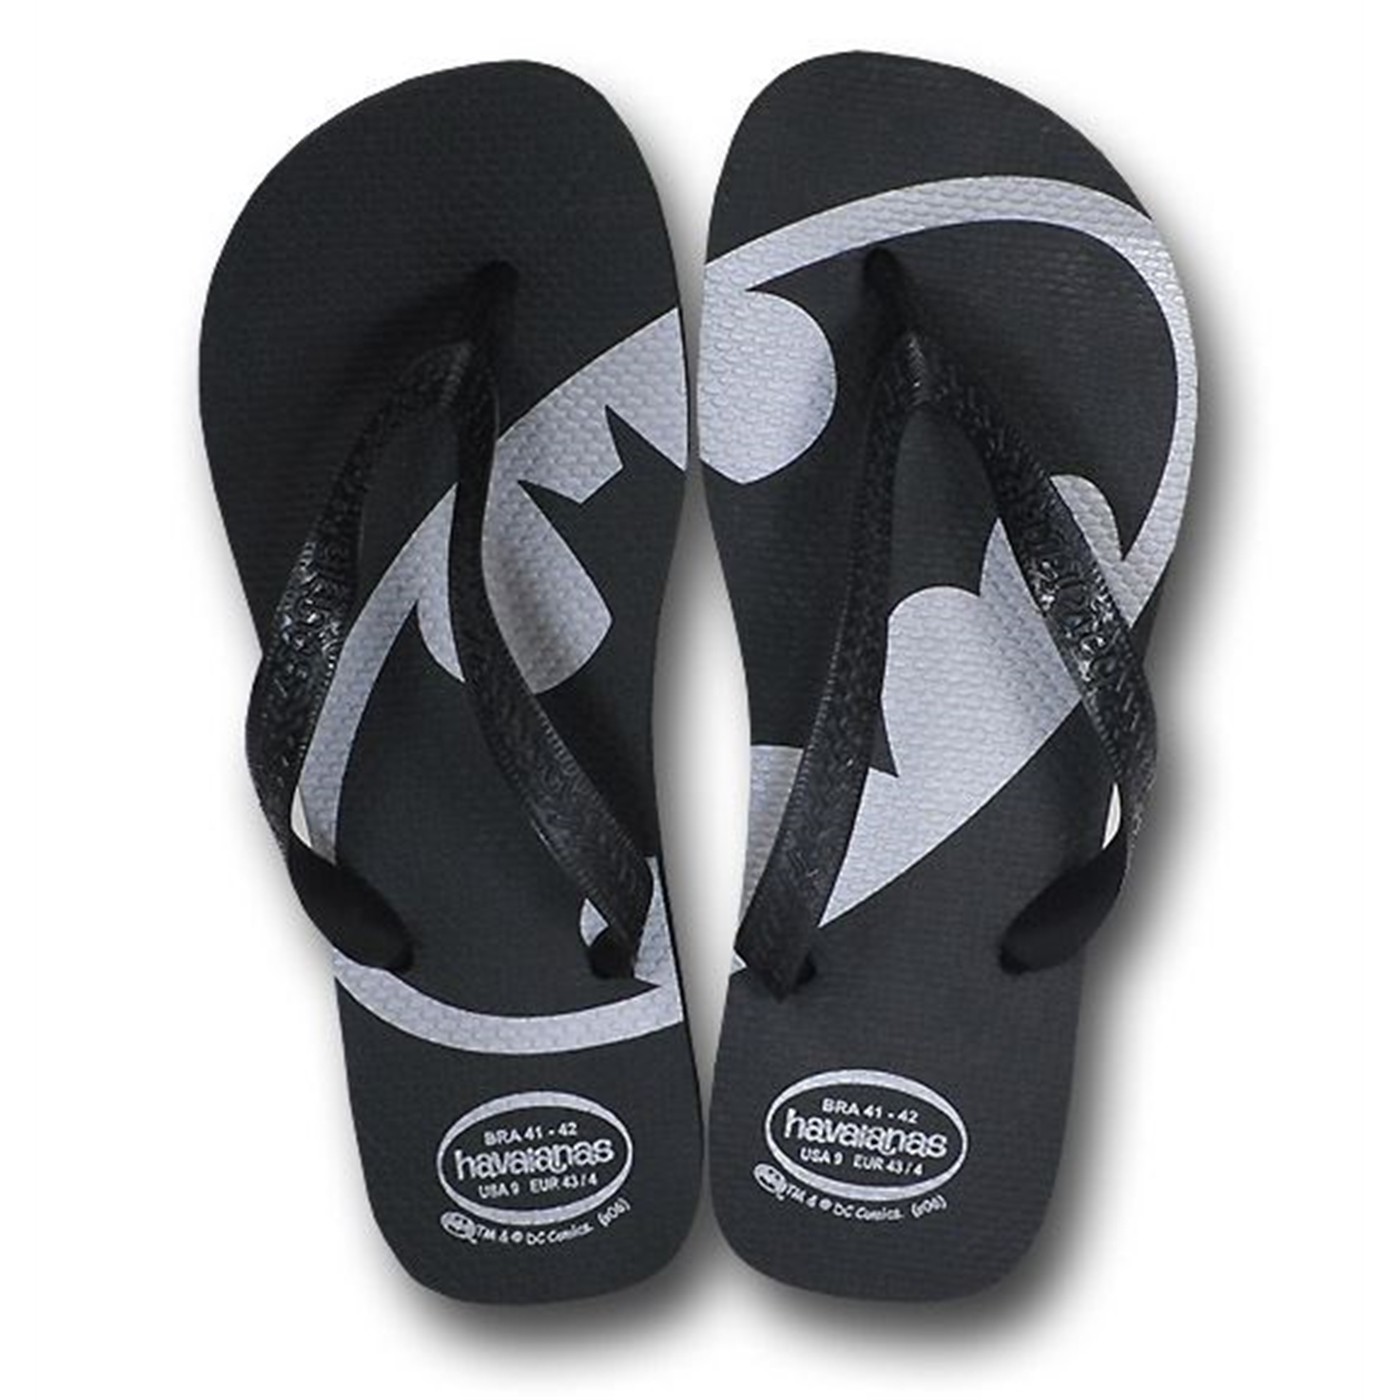 Batman Havaianas Black and Silver Sandal Flip Flops